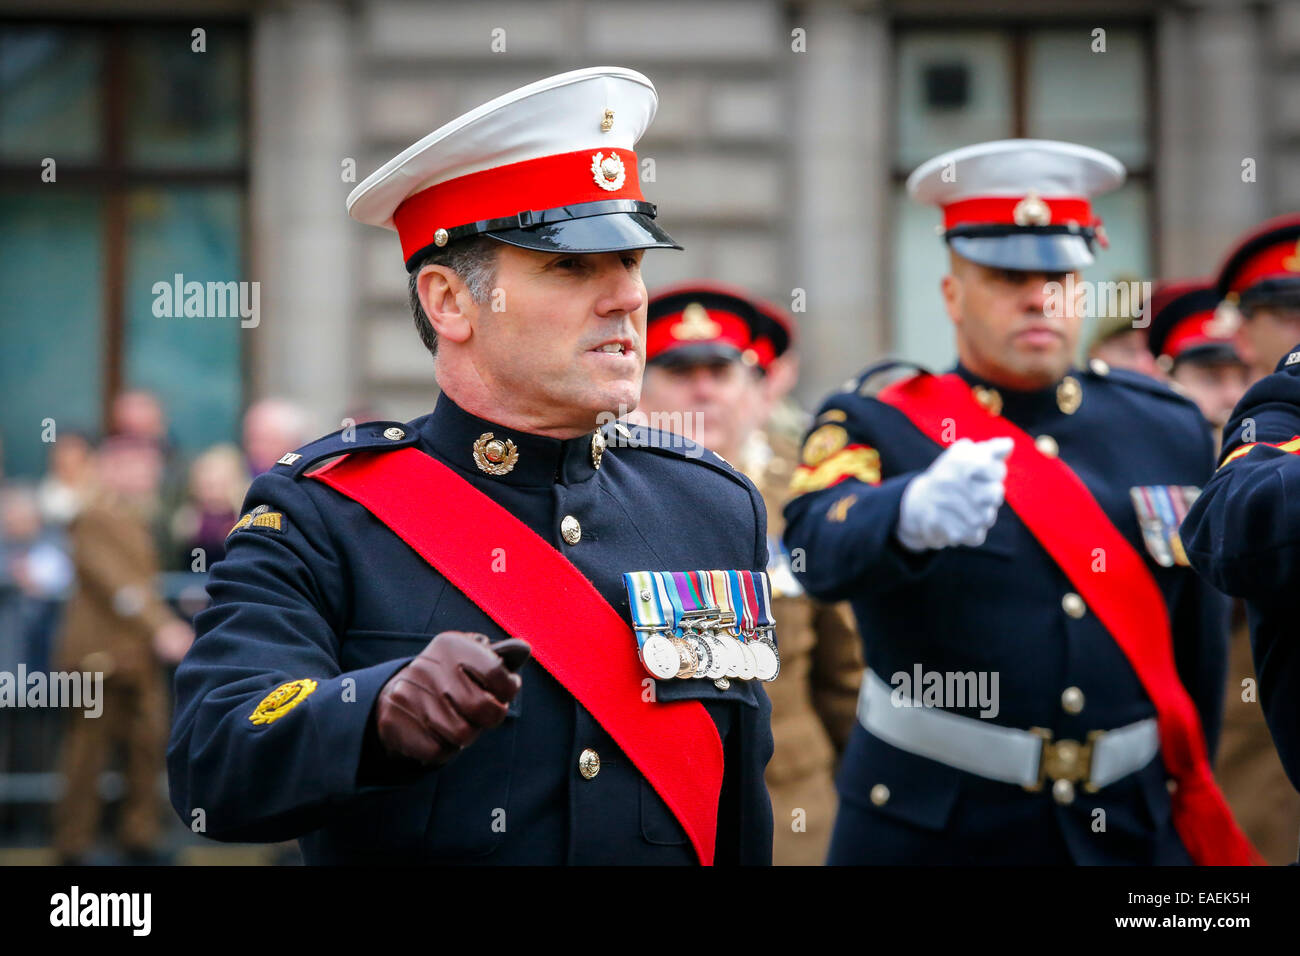 Marines on parade in dress uniform, Glasgow, Scotland, UK Stock Photo